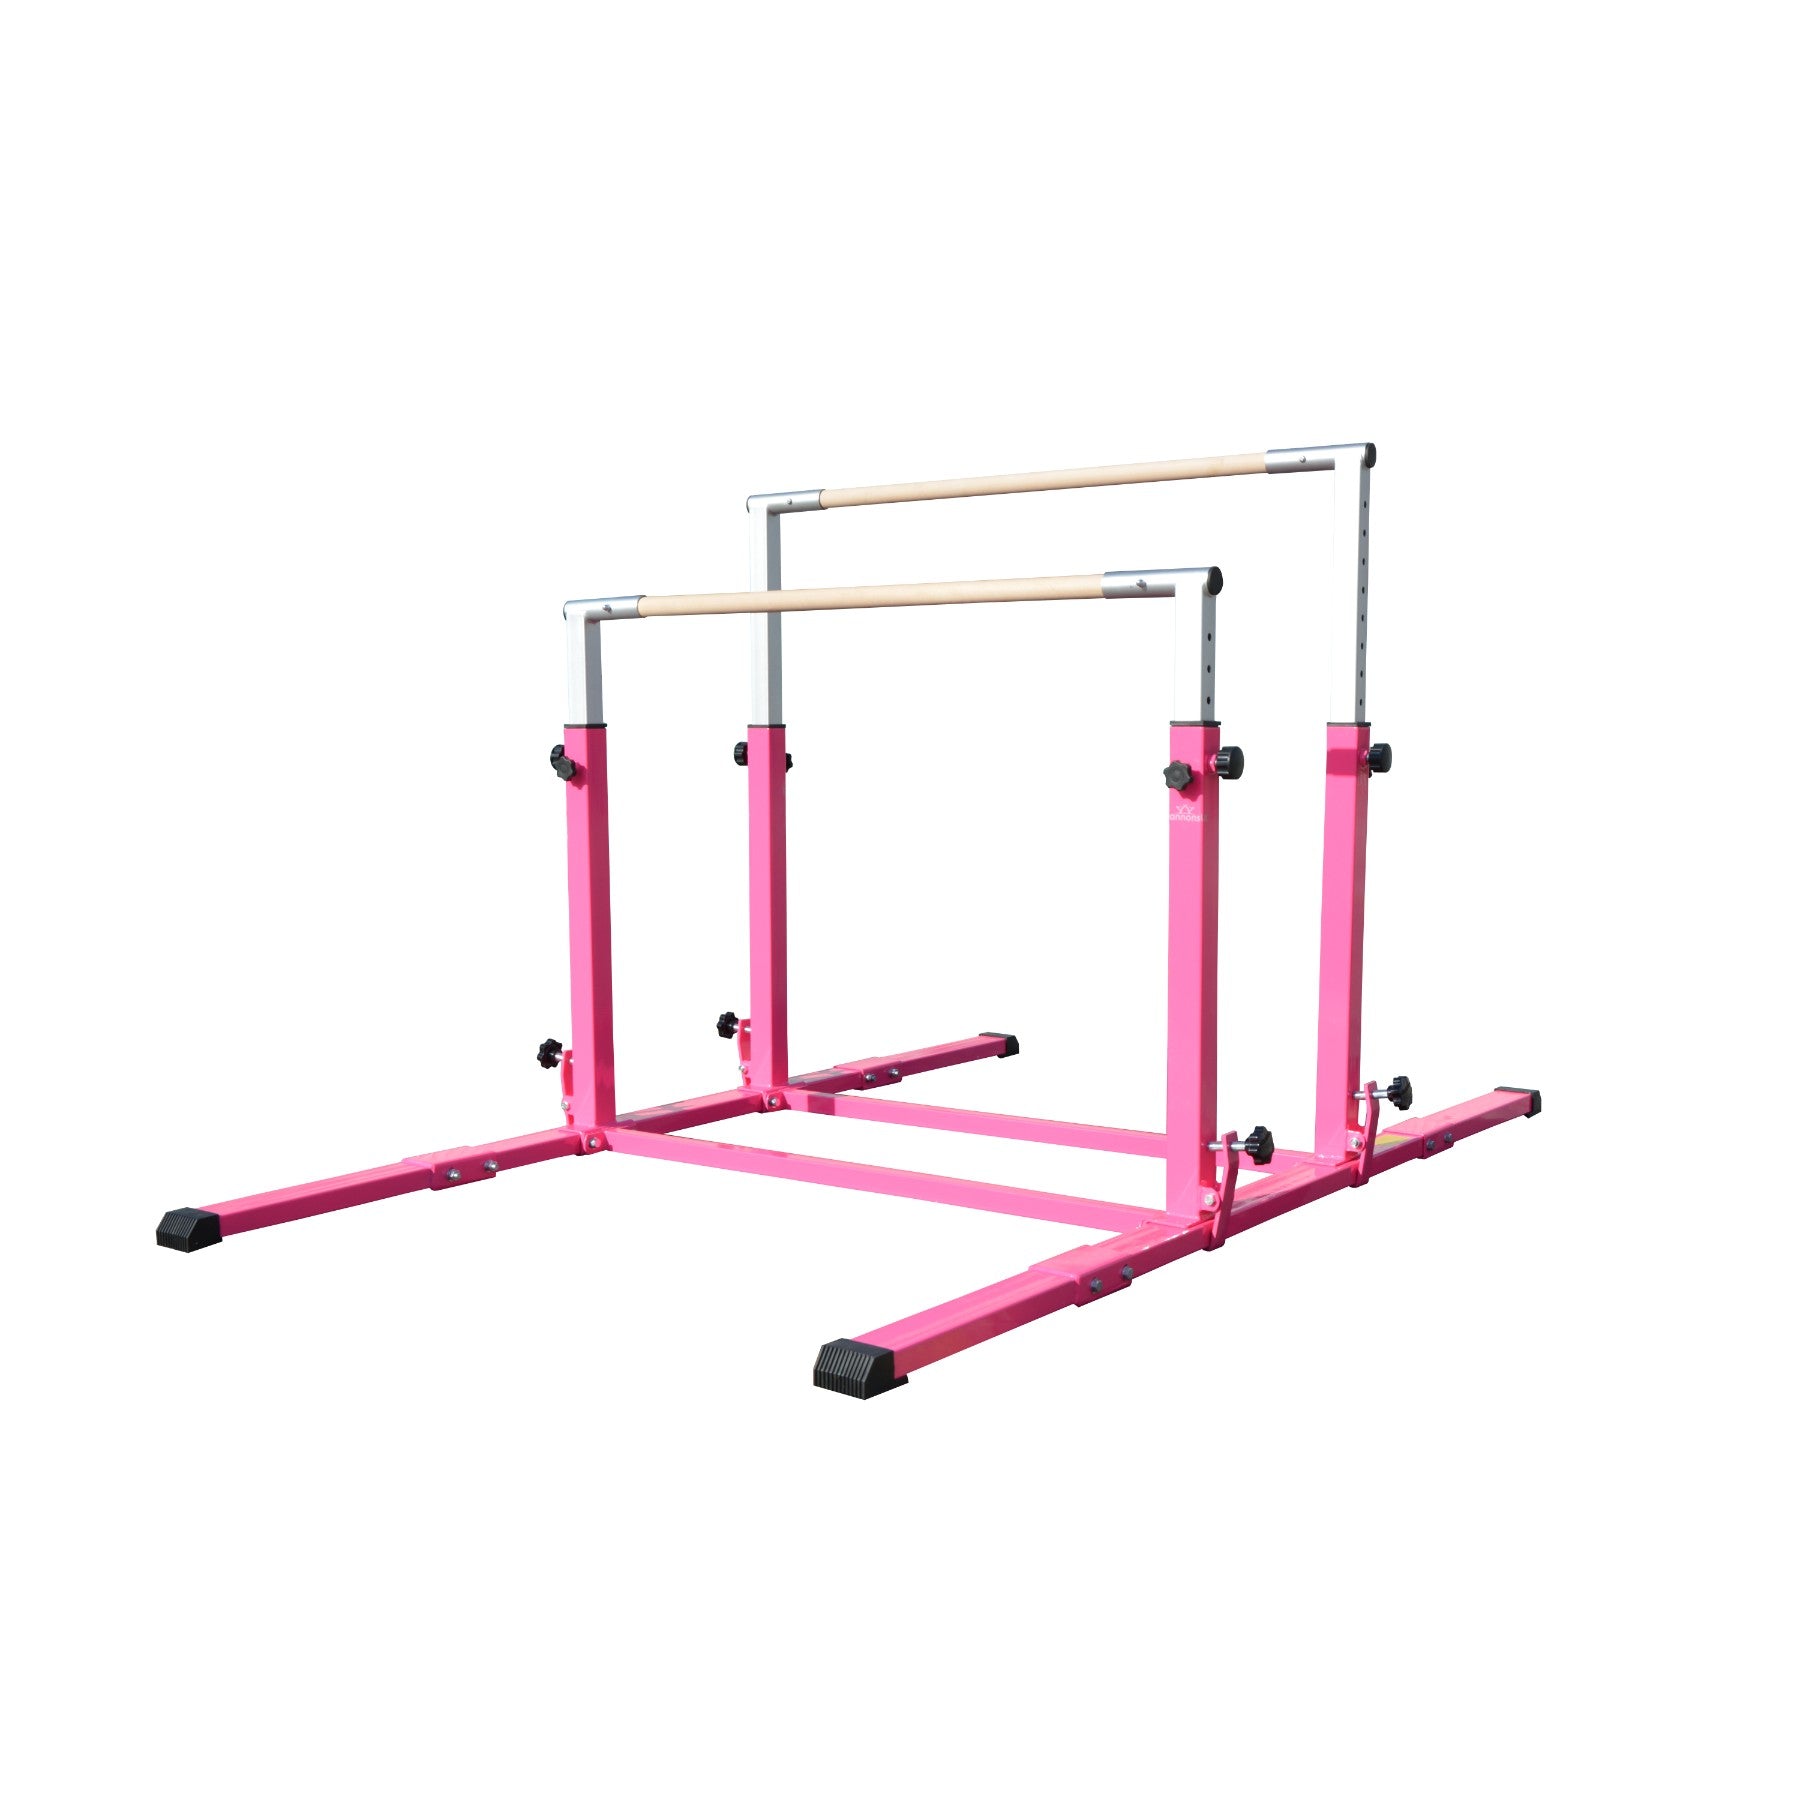 Cannons UK Junior Pro Parallel gymnastics bars in pink